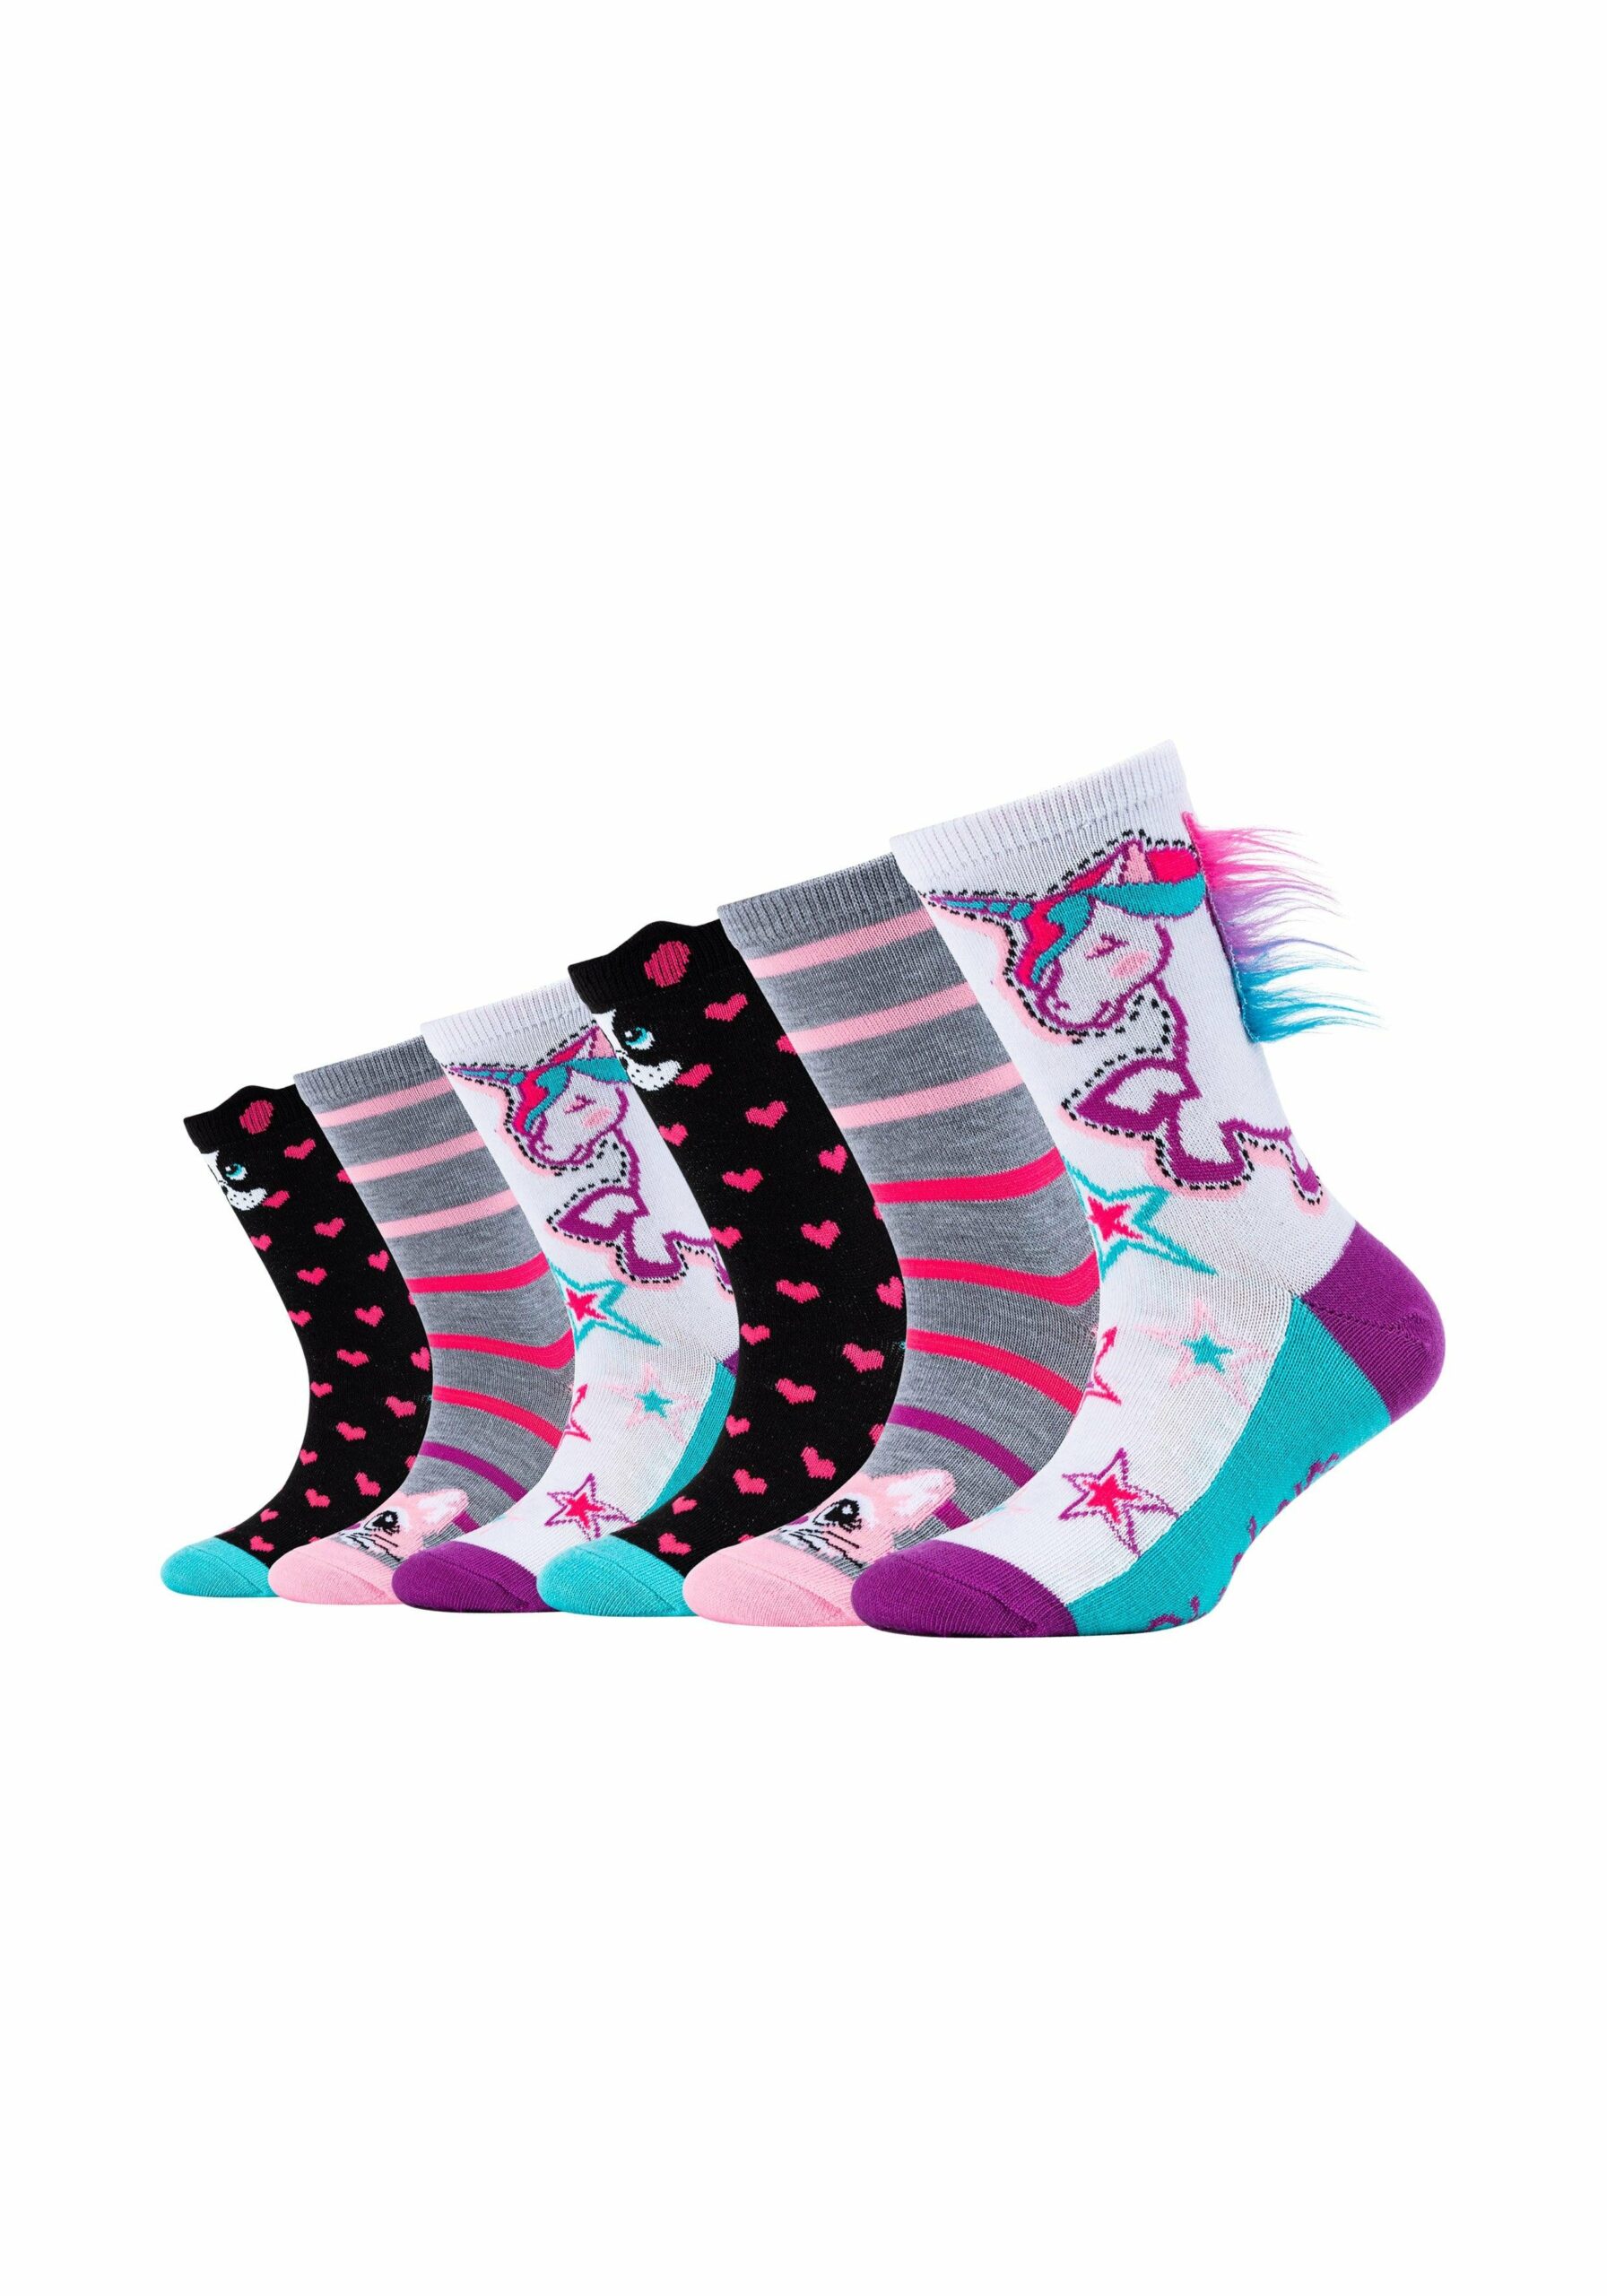 Skechers Kinder-Socken bei Tier-Motiv 6er Pack kaufen white